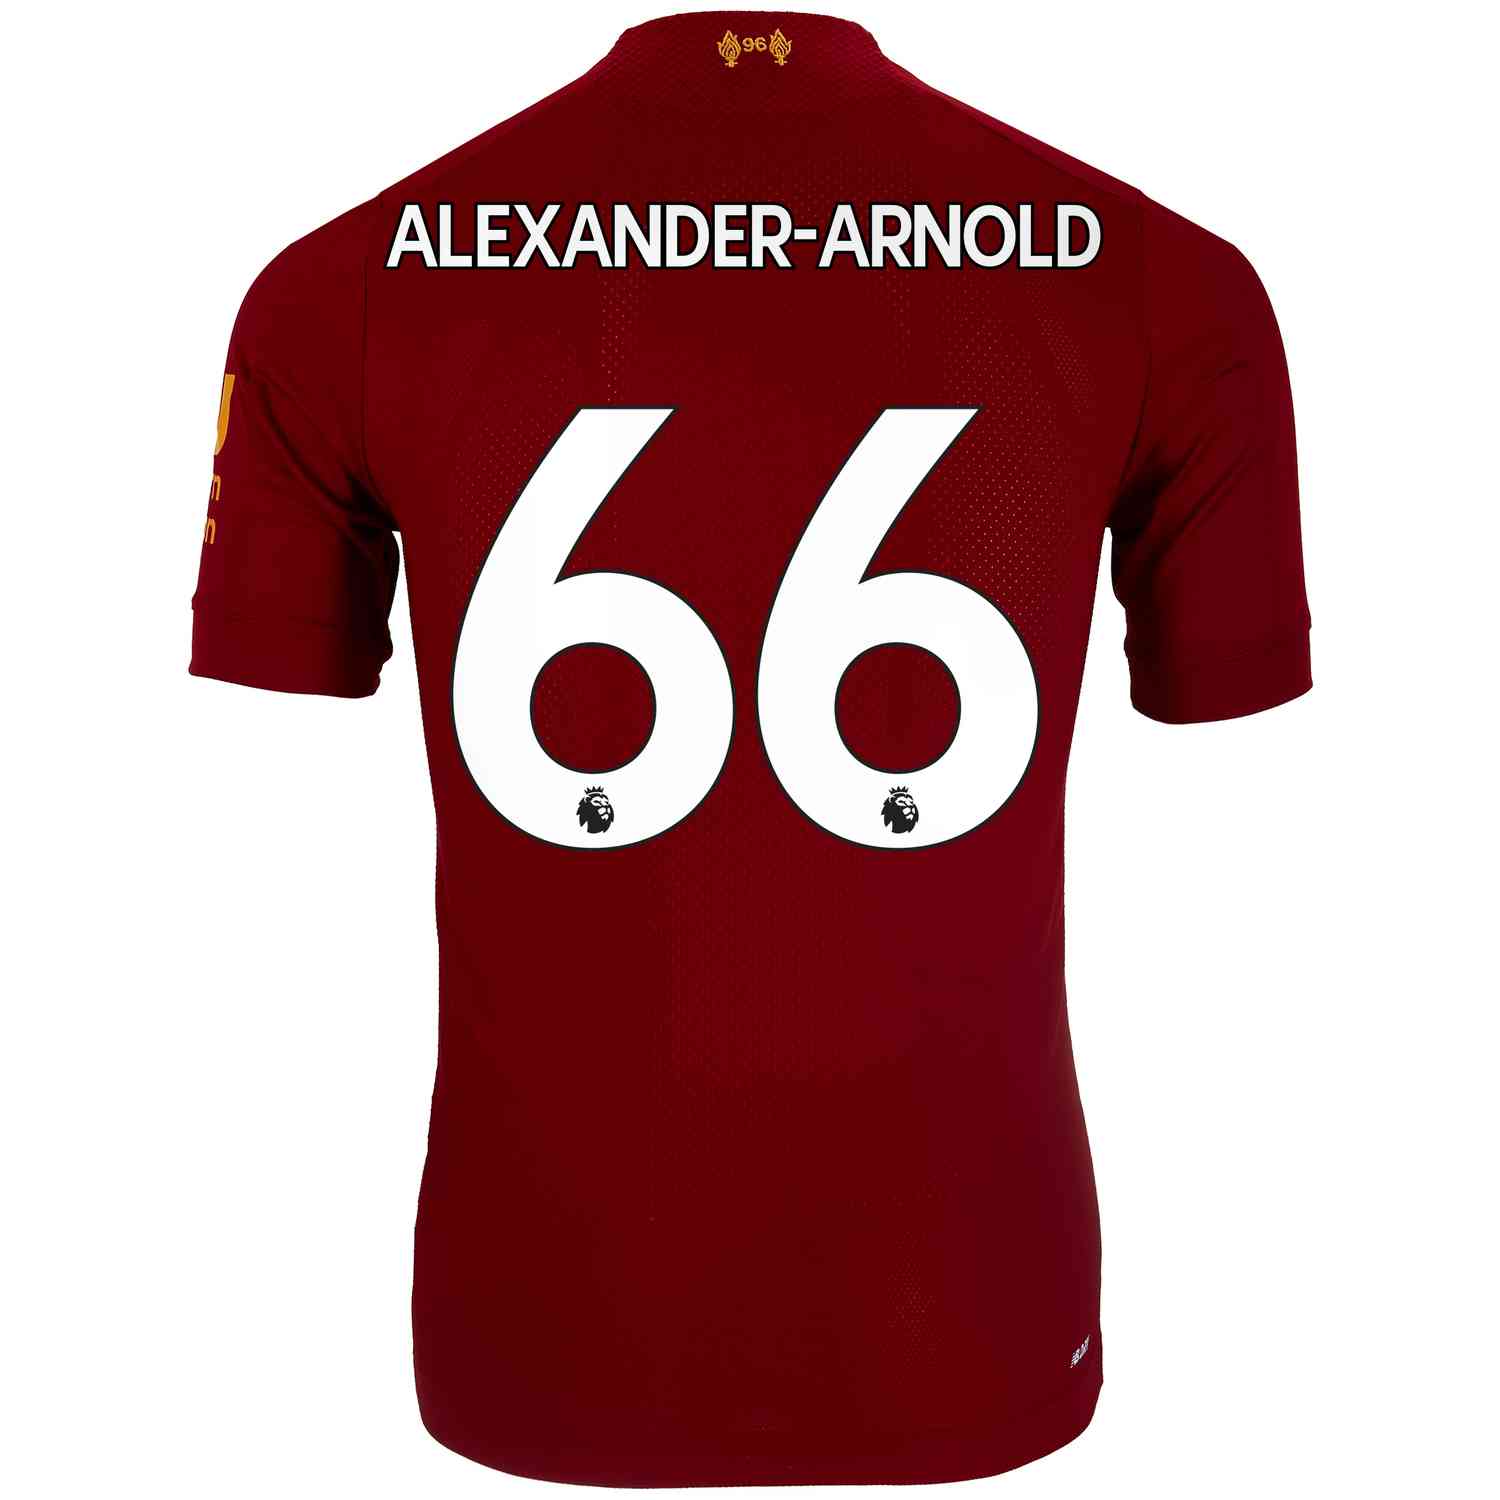 alexander arnold jersey